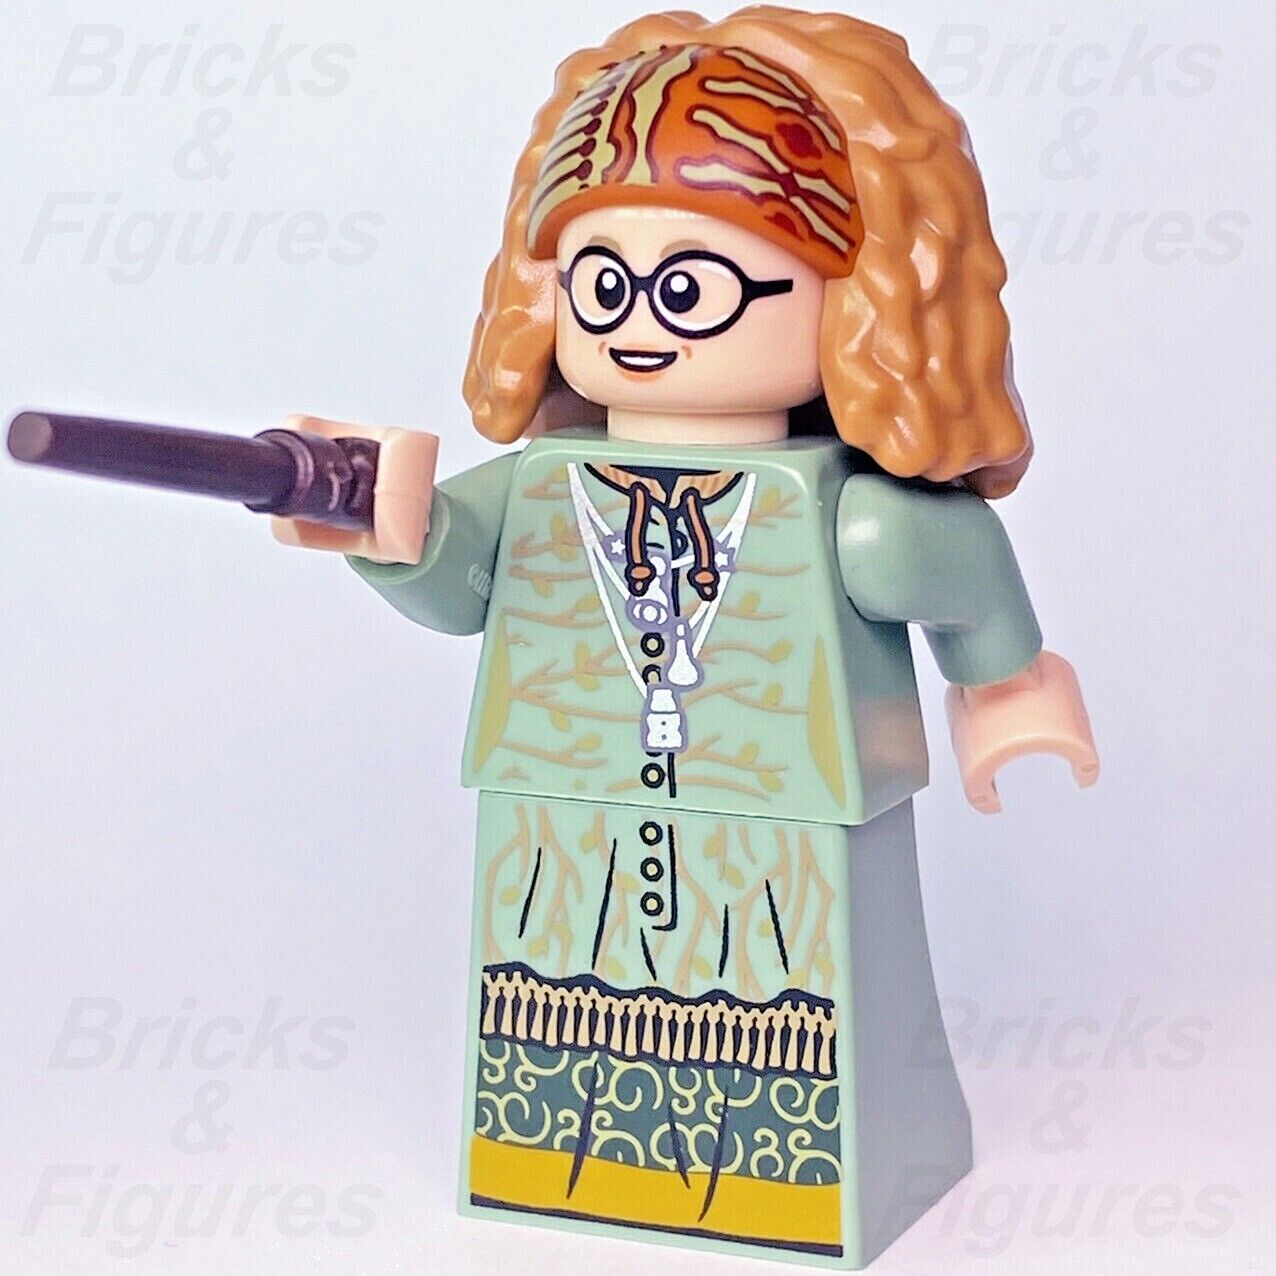 Harry Potter LEGO Professor Trelawney Collectible Minifigures Series 1 71022 - Bricks & Figures